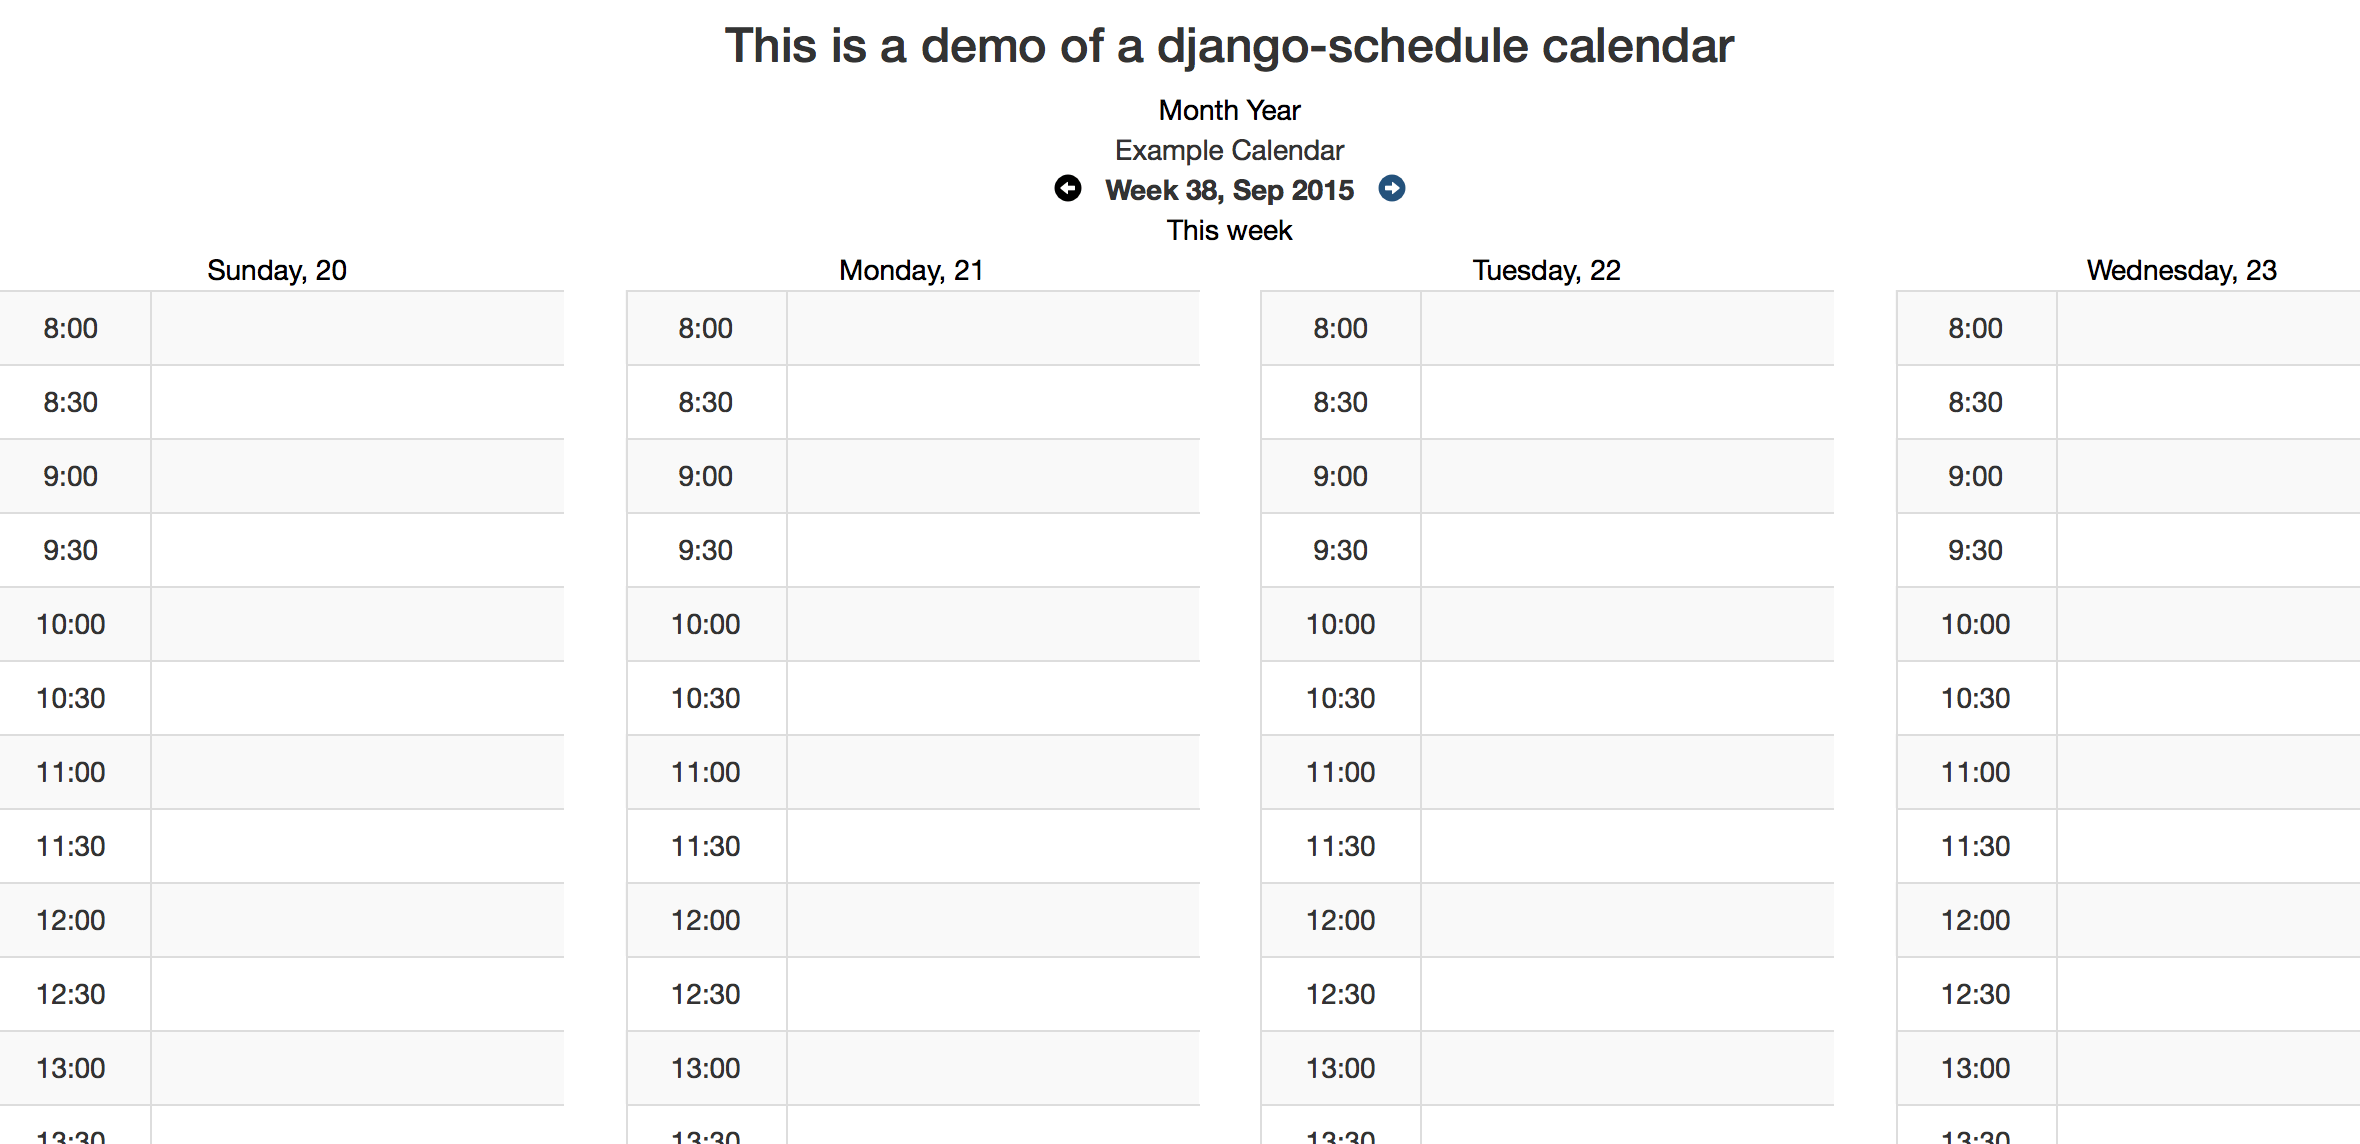 Calendar and Schedule App in Django Free Source code - Daily View